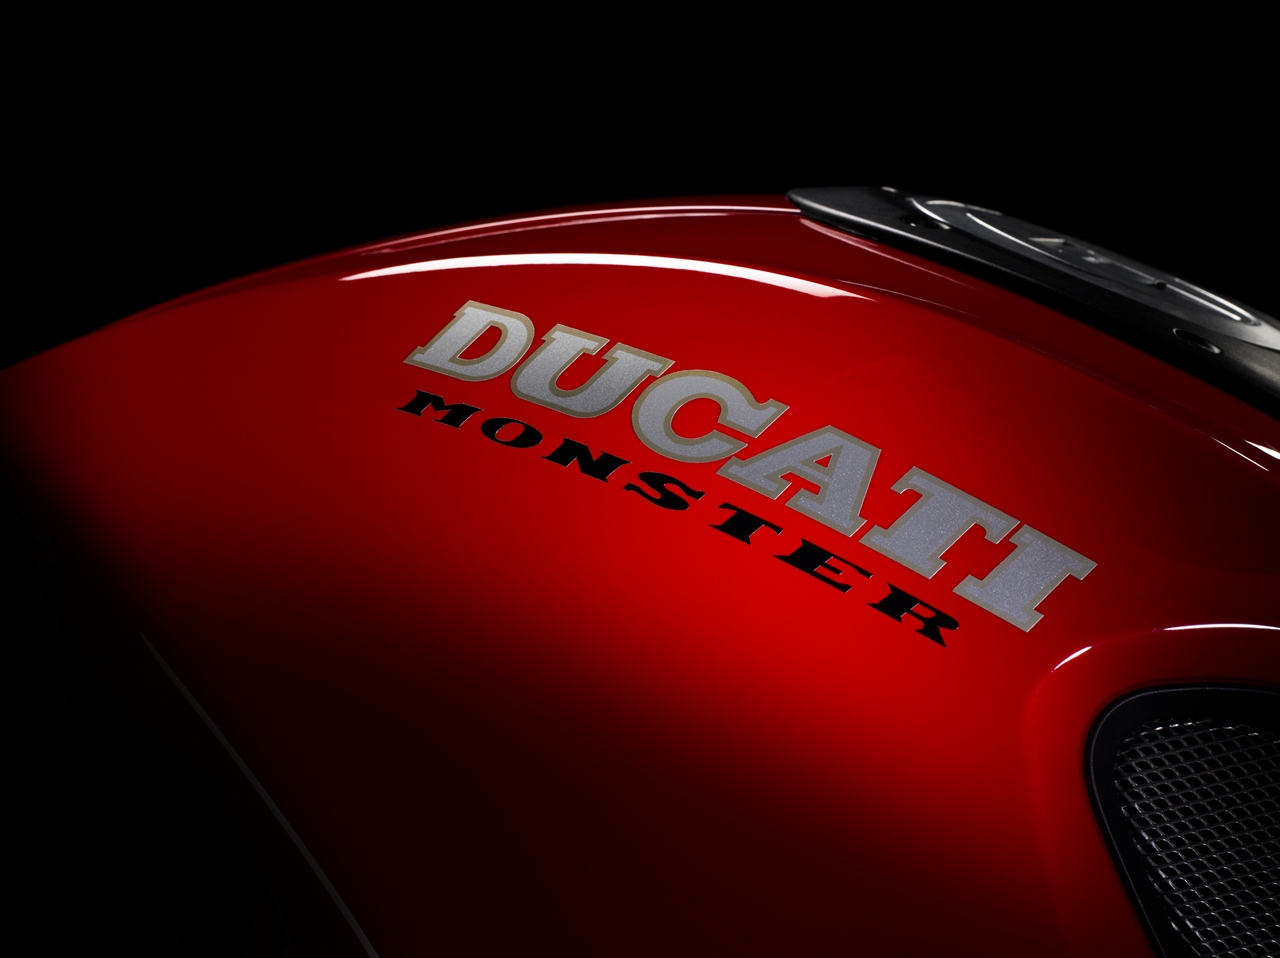 Ducati Monster MY 2013 ad EICMA 2012